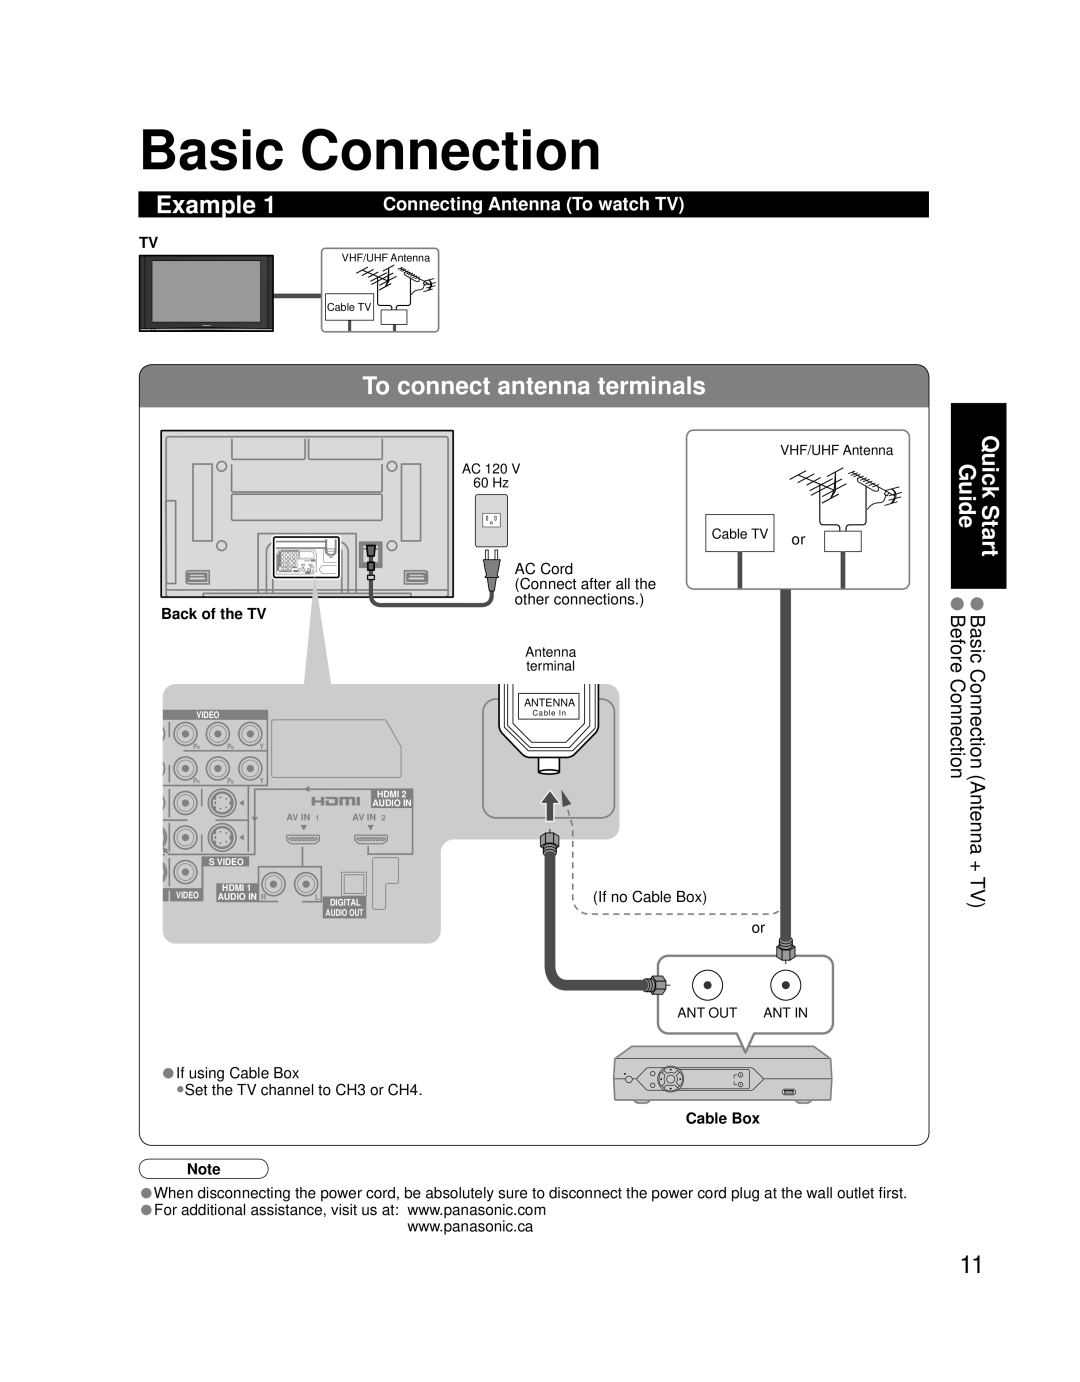 Panasonic TQB2AA0756 Basic Connection, Example, To connect antenna terminals, Connecting Antenna To watch TV, Cable Box 